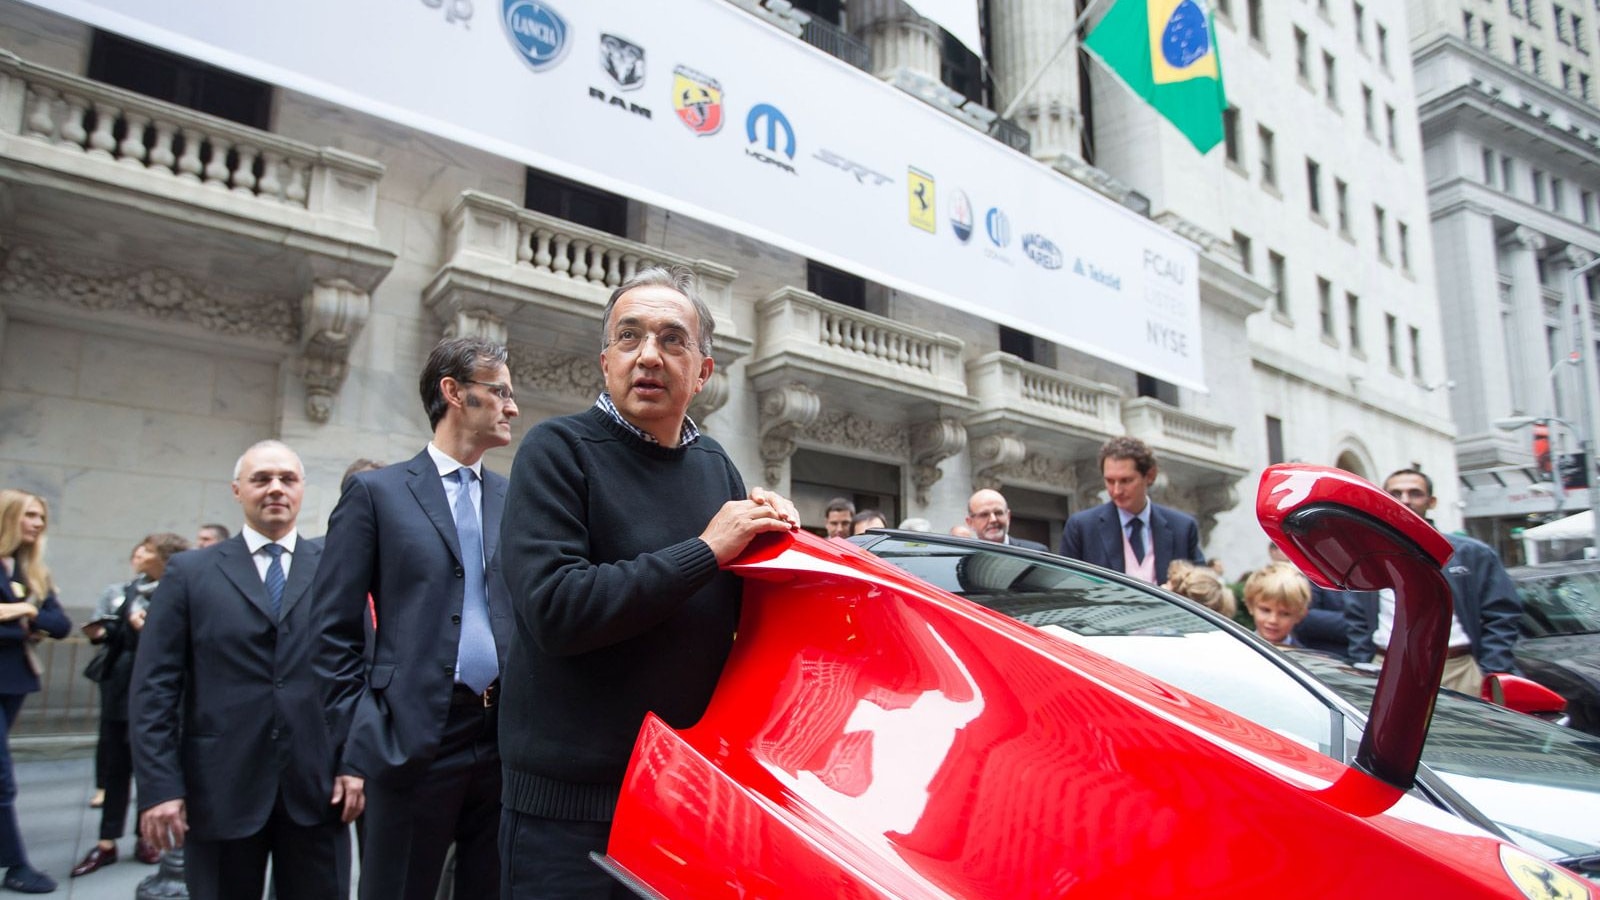 Fiat Chrysler Automobiles starts trading on the New York Stock Exchange